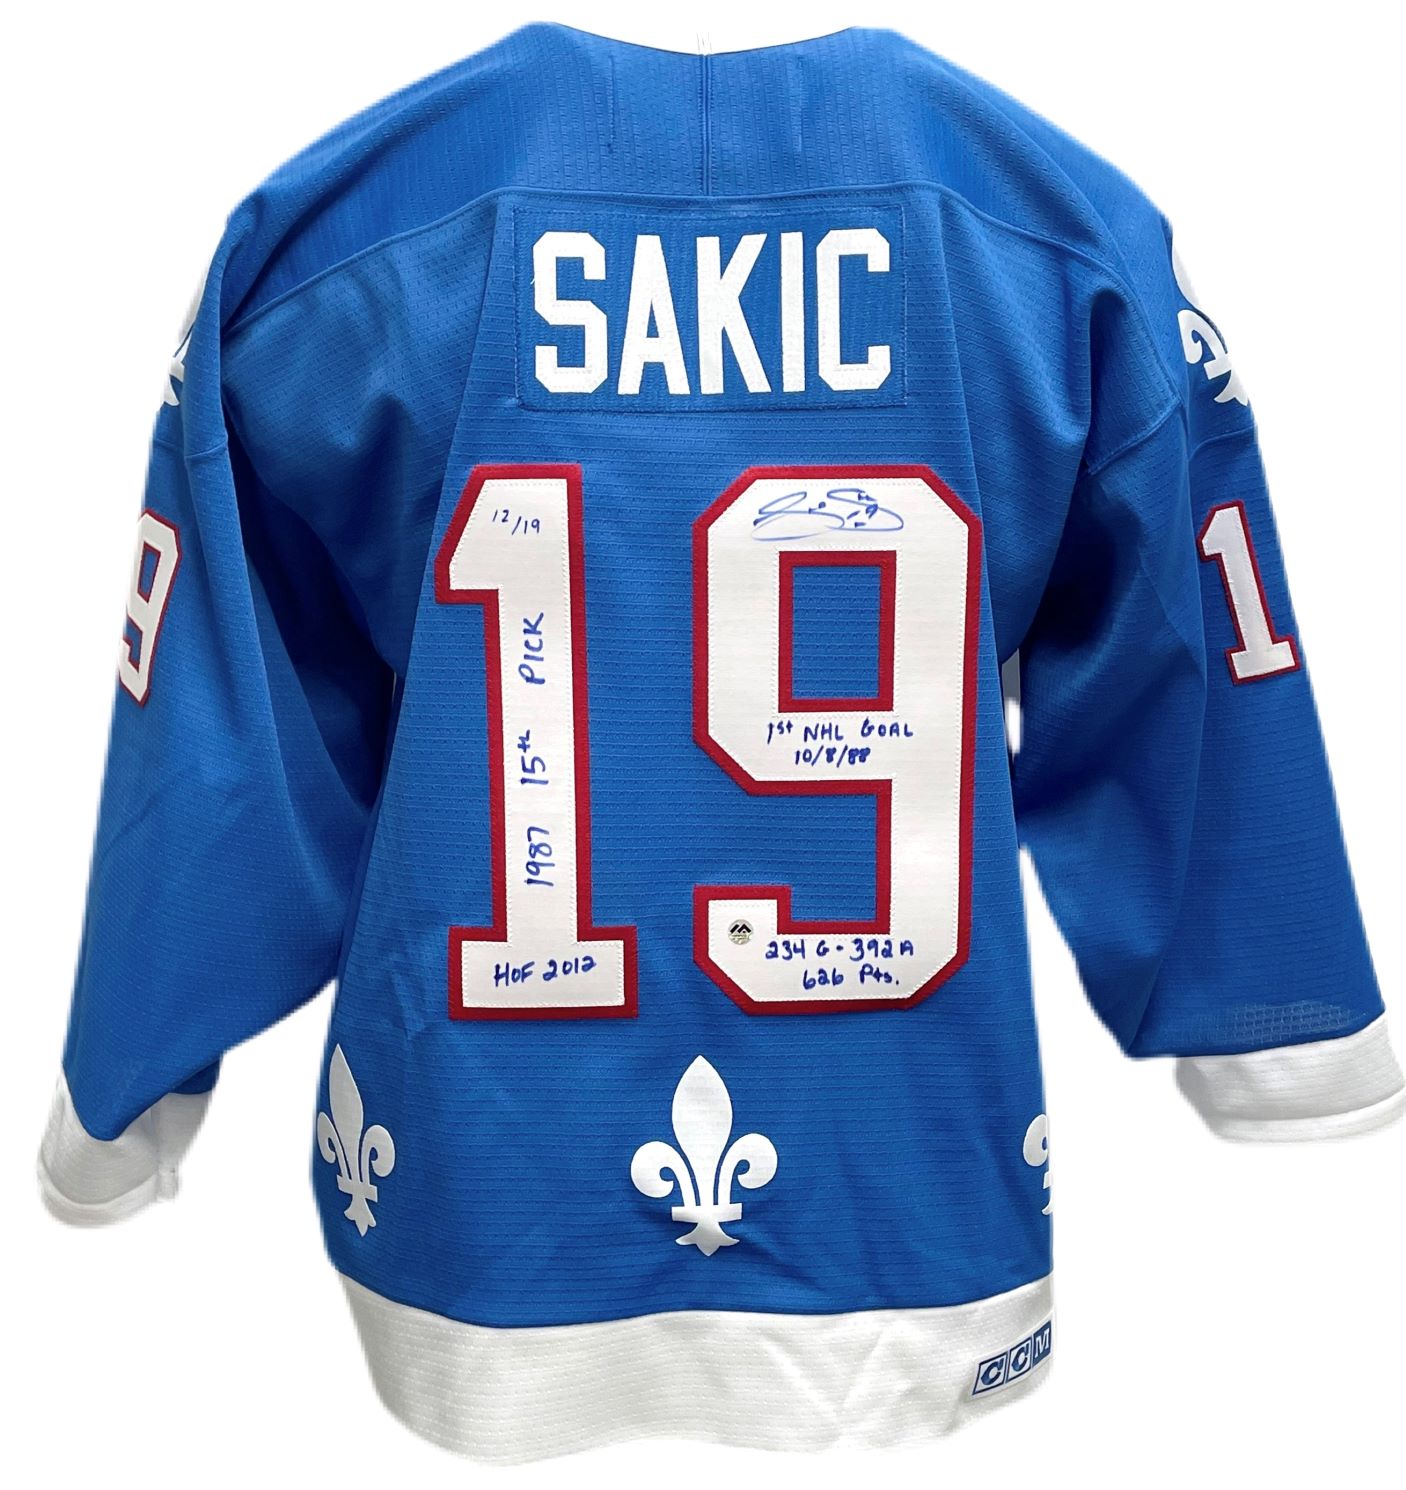 NHL Joe Sakic Signed Jerseys, Collectible Joe Sakic Signed Jerseys